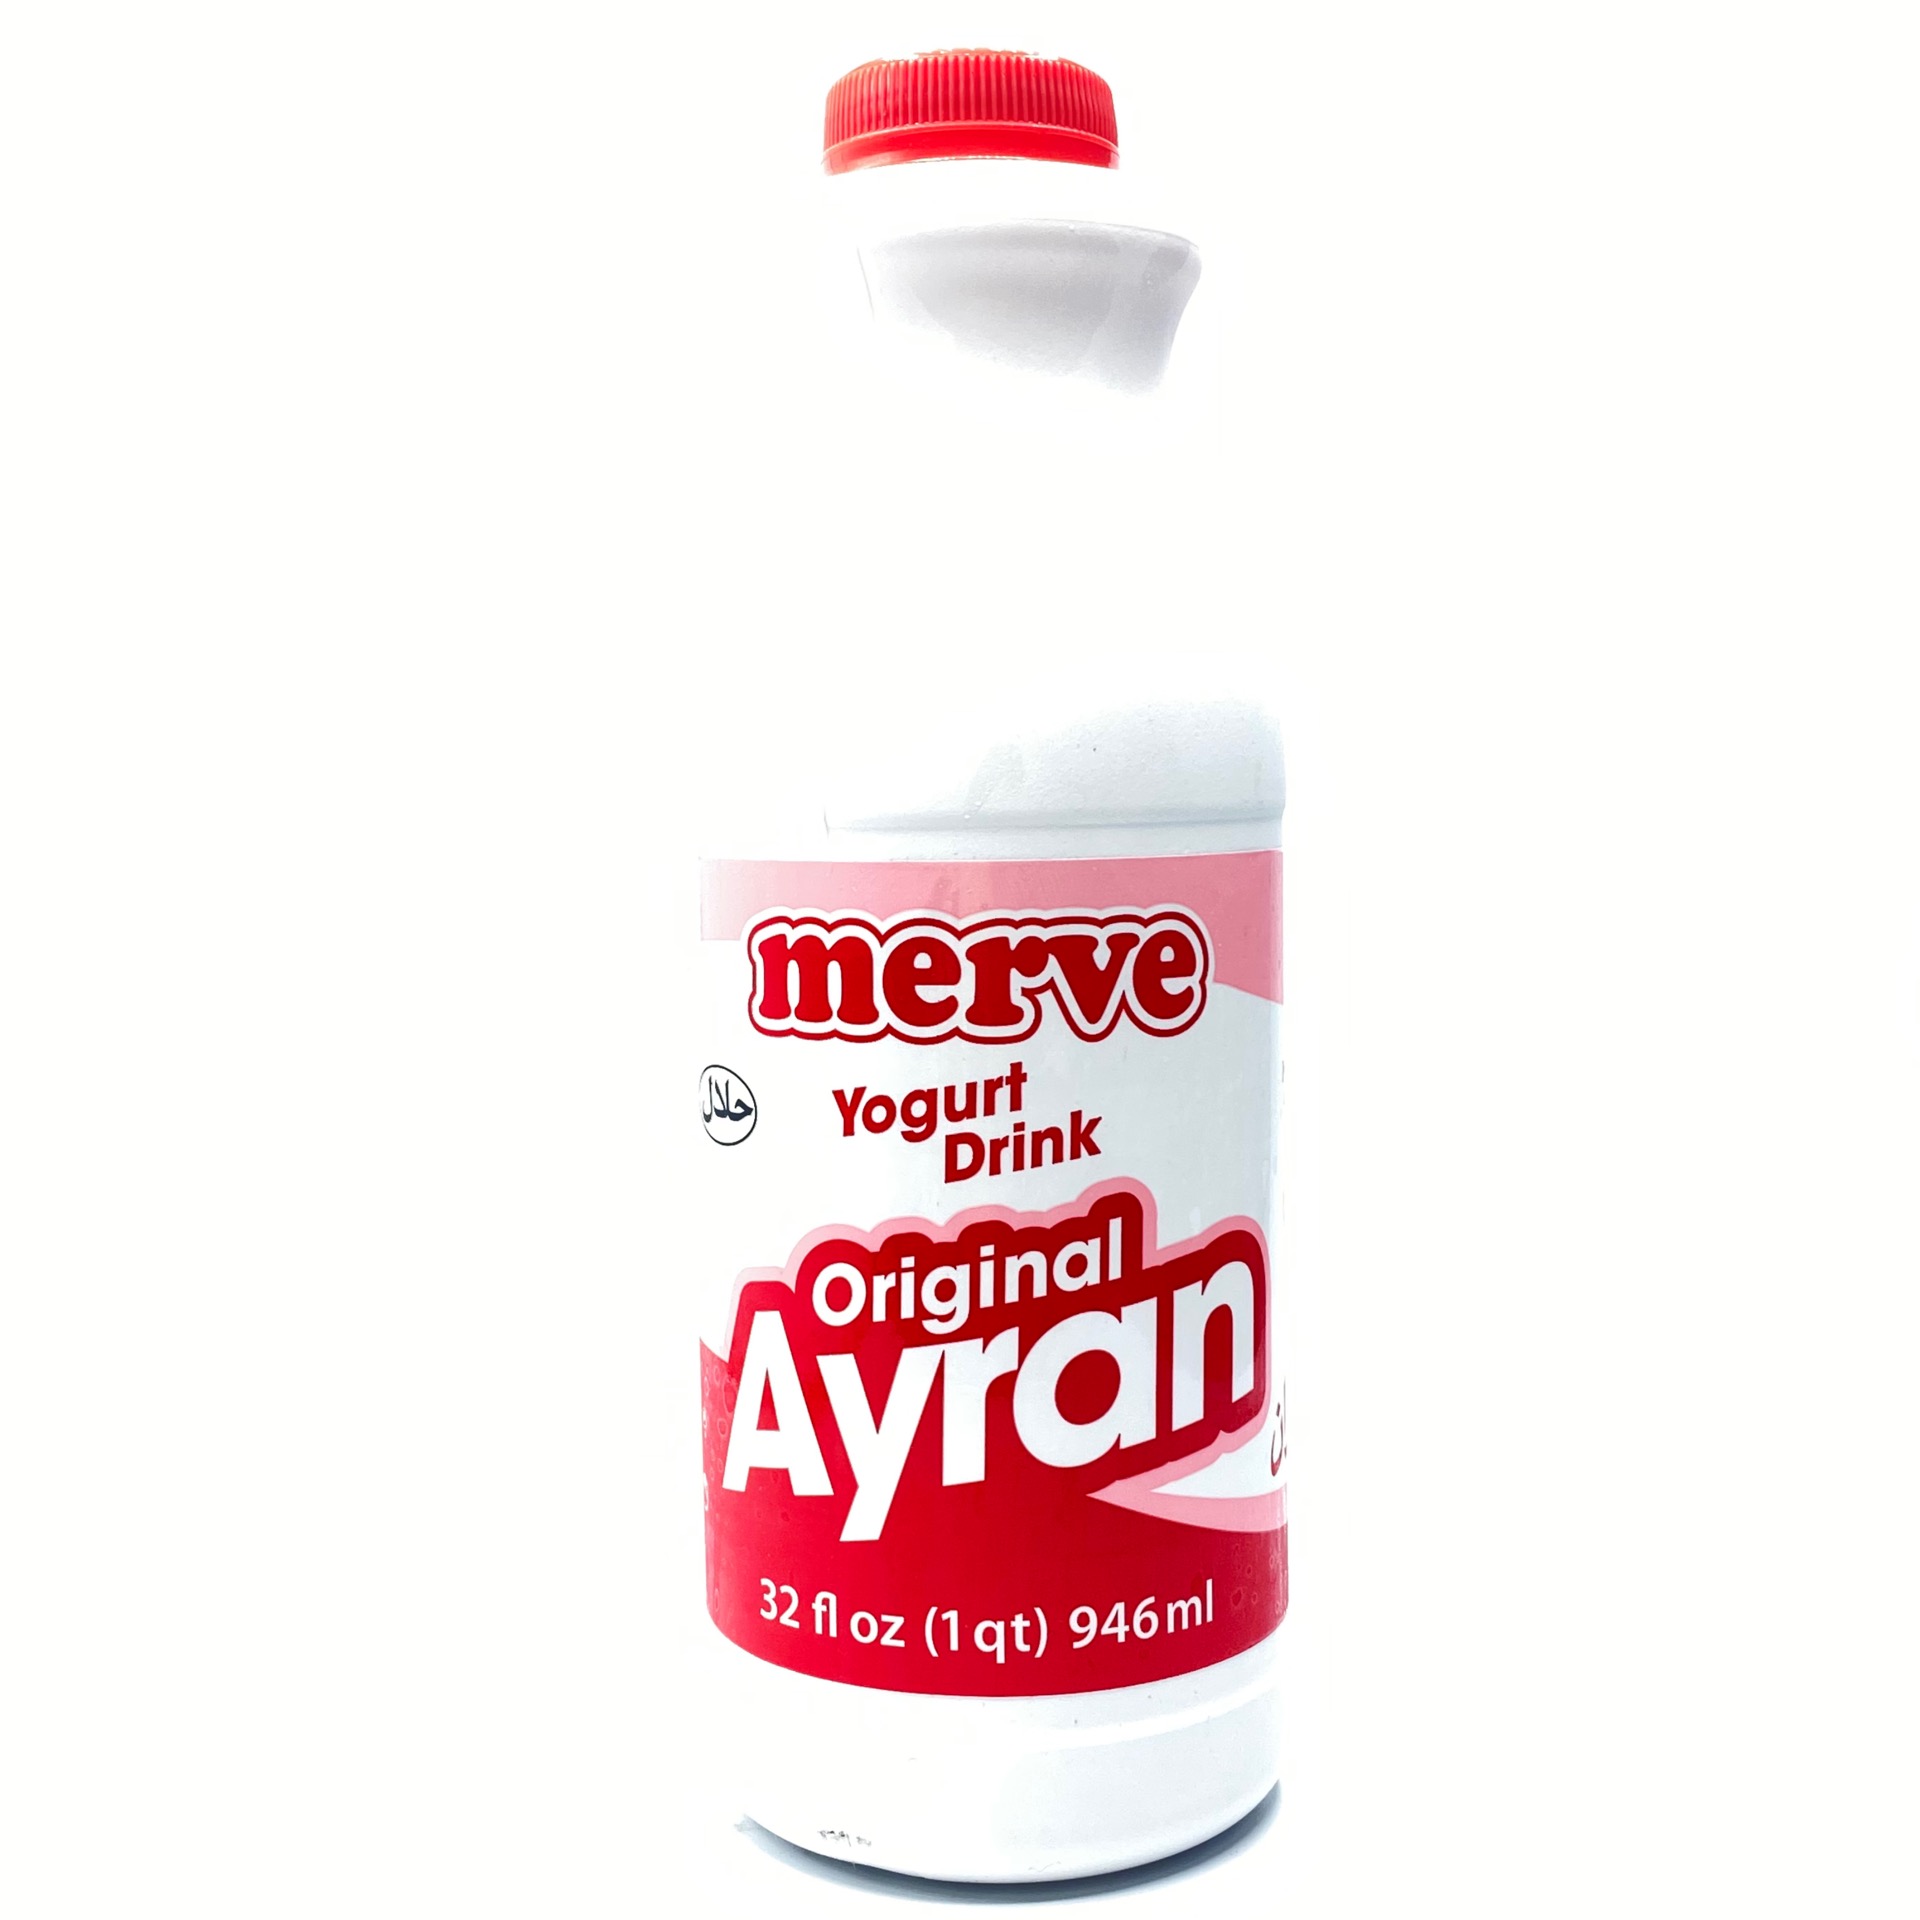 AYRAN YOGURT DRINK (1 QT)